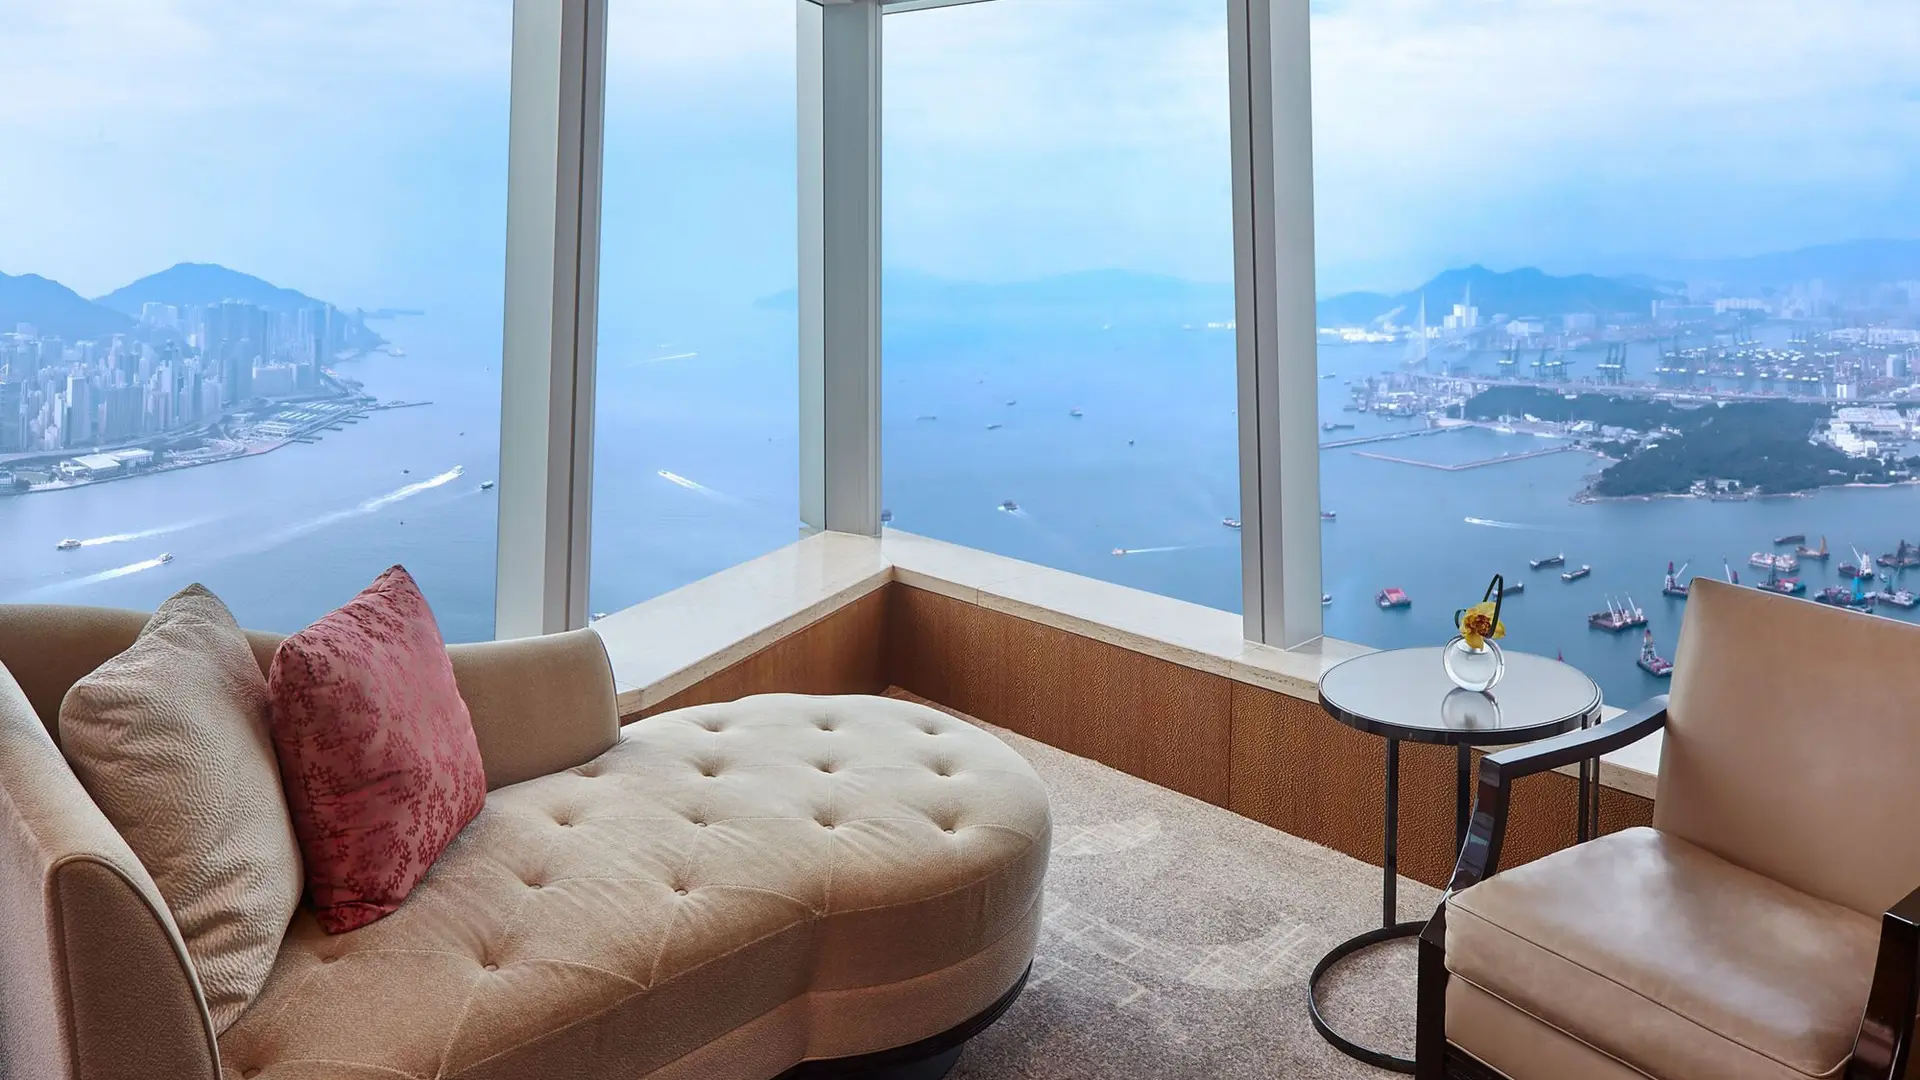 Hotel review Location' - The Ritz-Carlton Hong Kong - 3